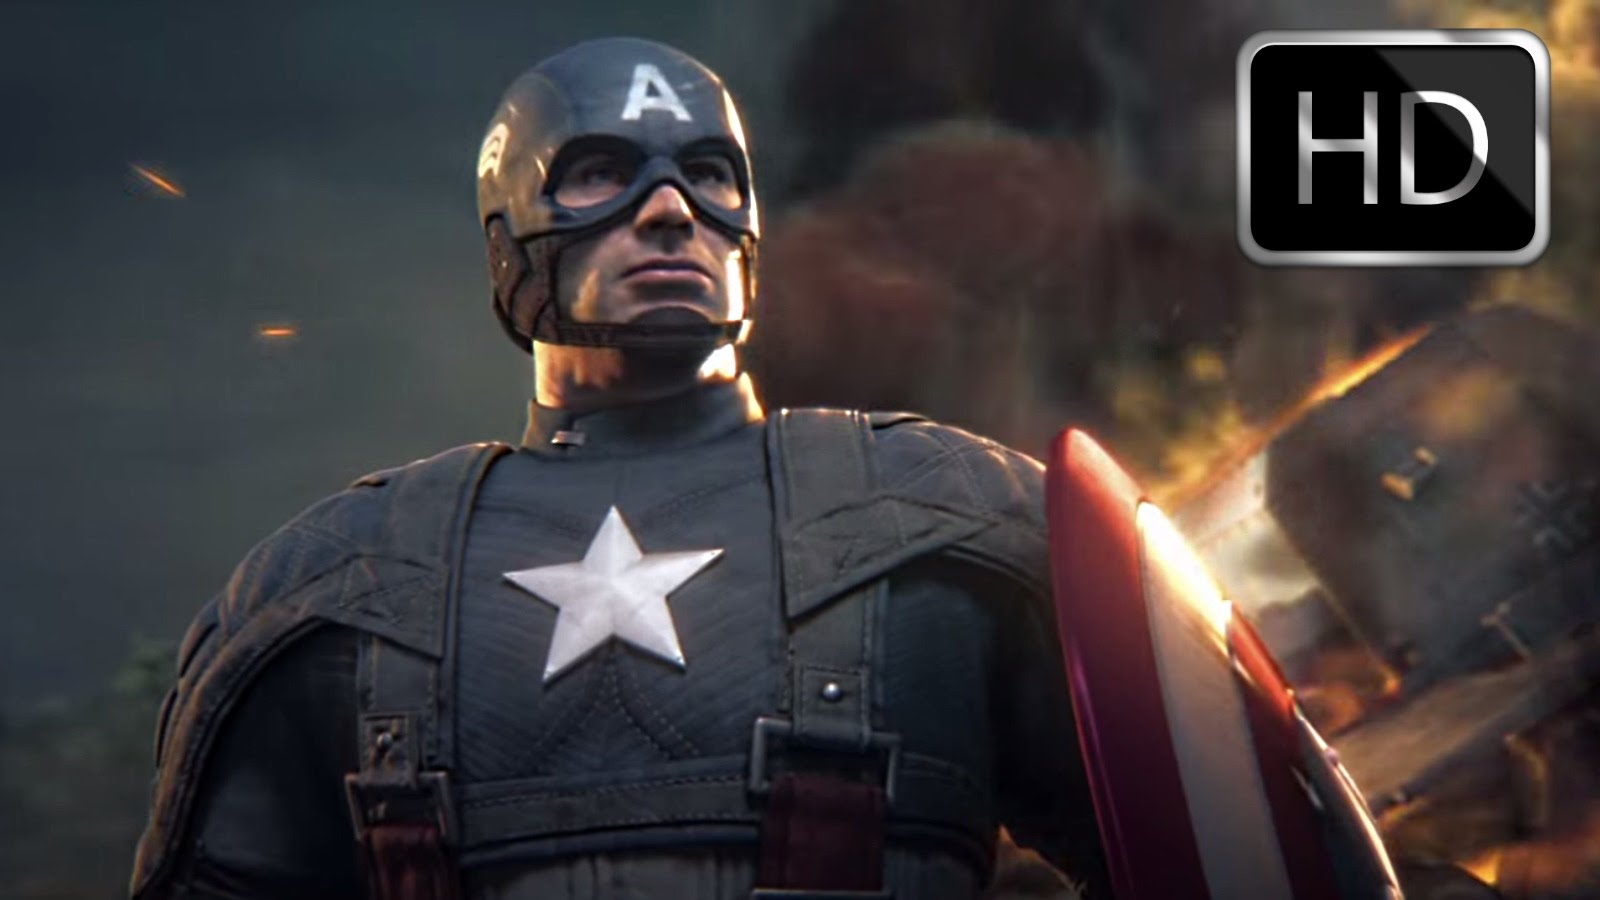 captain america super soldier walkthrough chapter 14